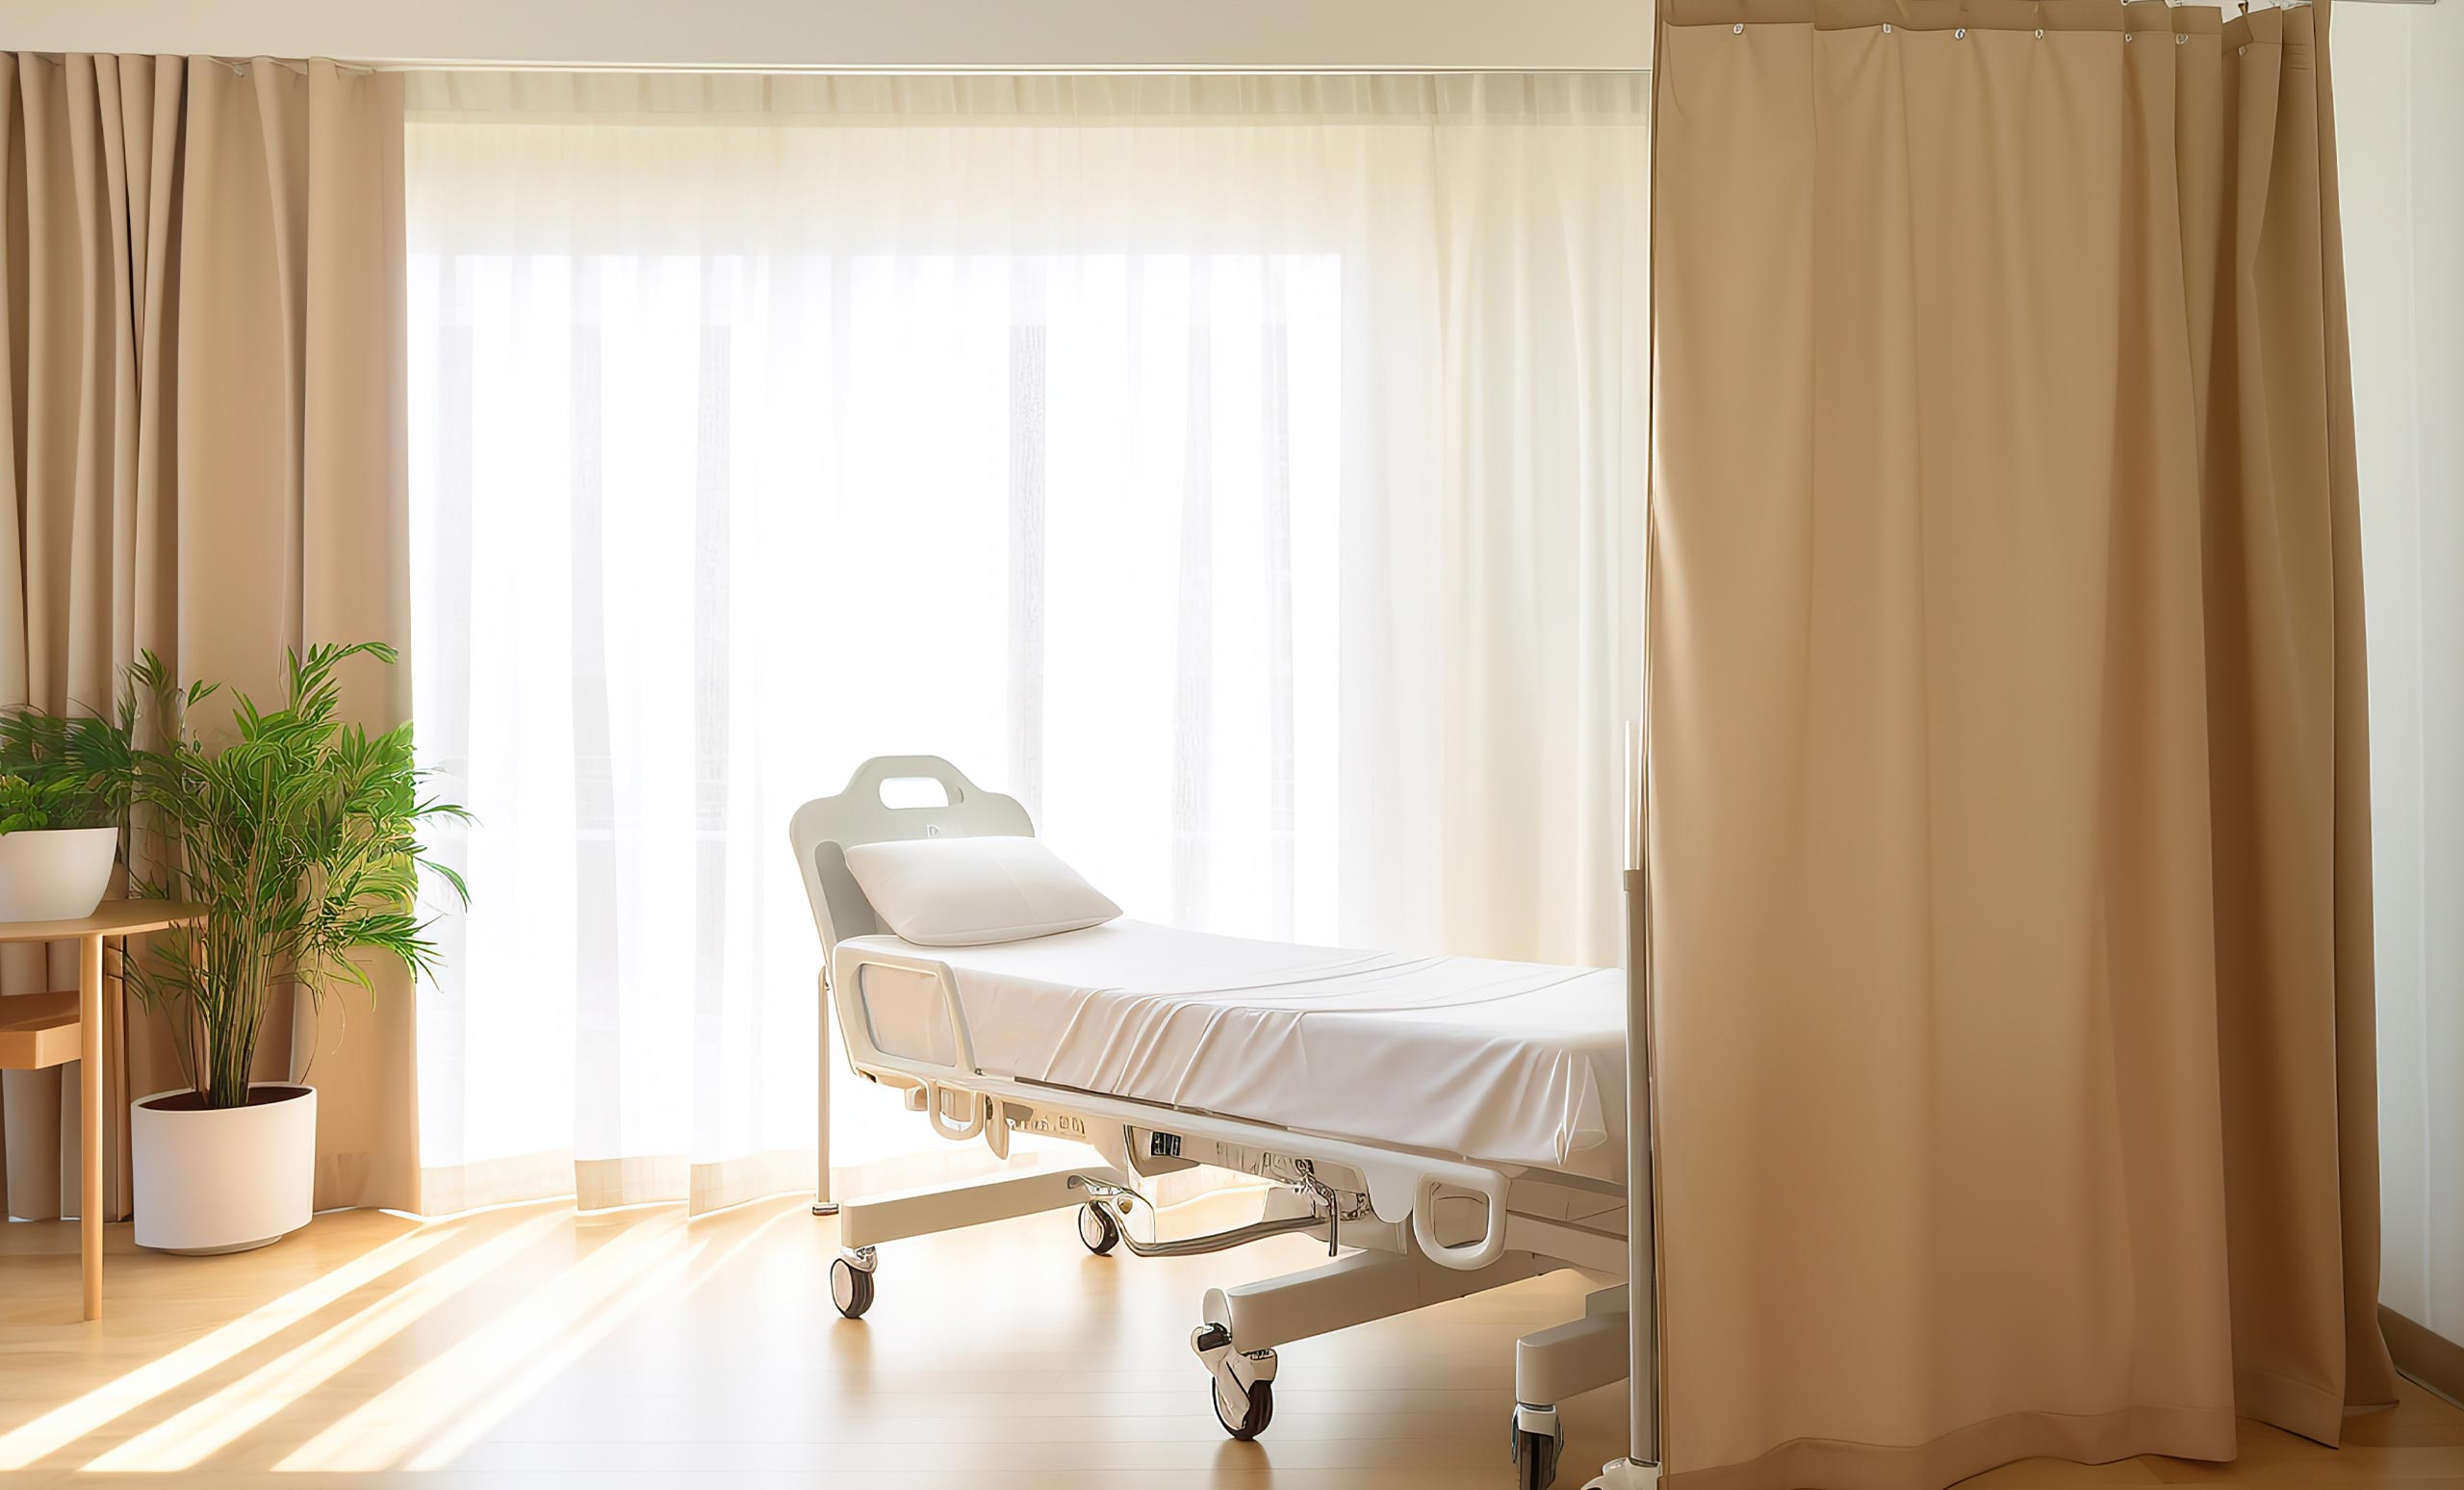 does hospice provide hospital beds